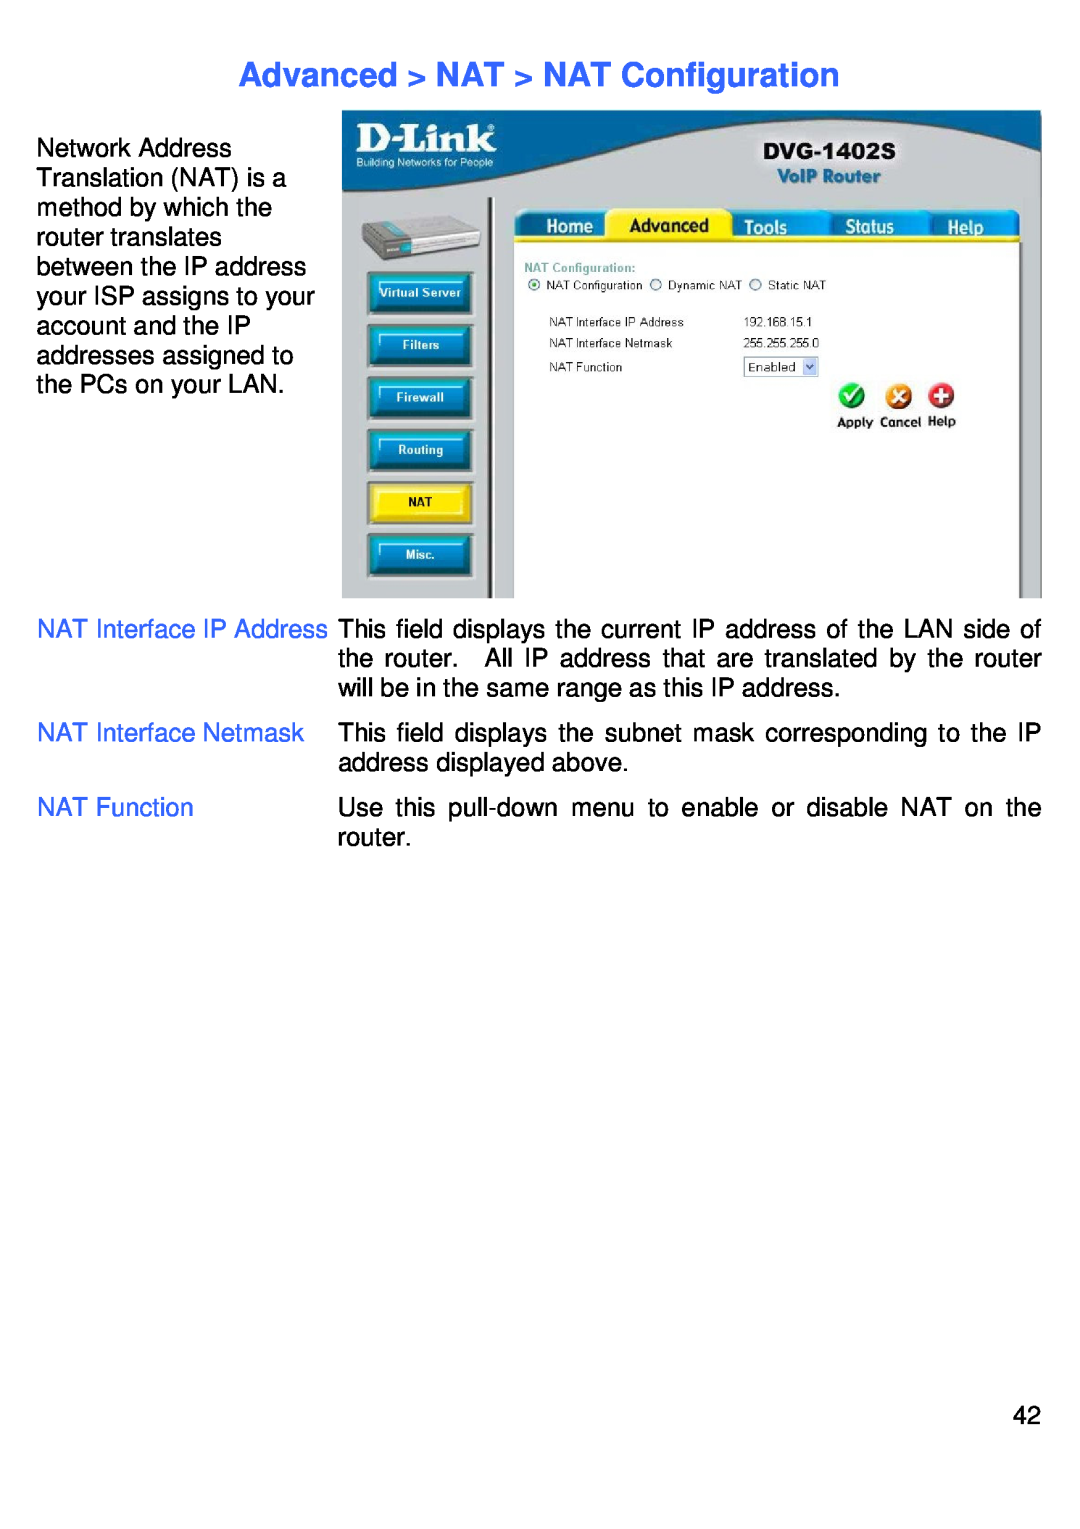 D-Link DVG-1402S manual Advanced NAT NAT Configuration, NAT Interface Netmask, NAT Function 